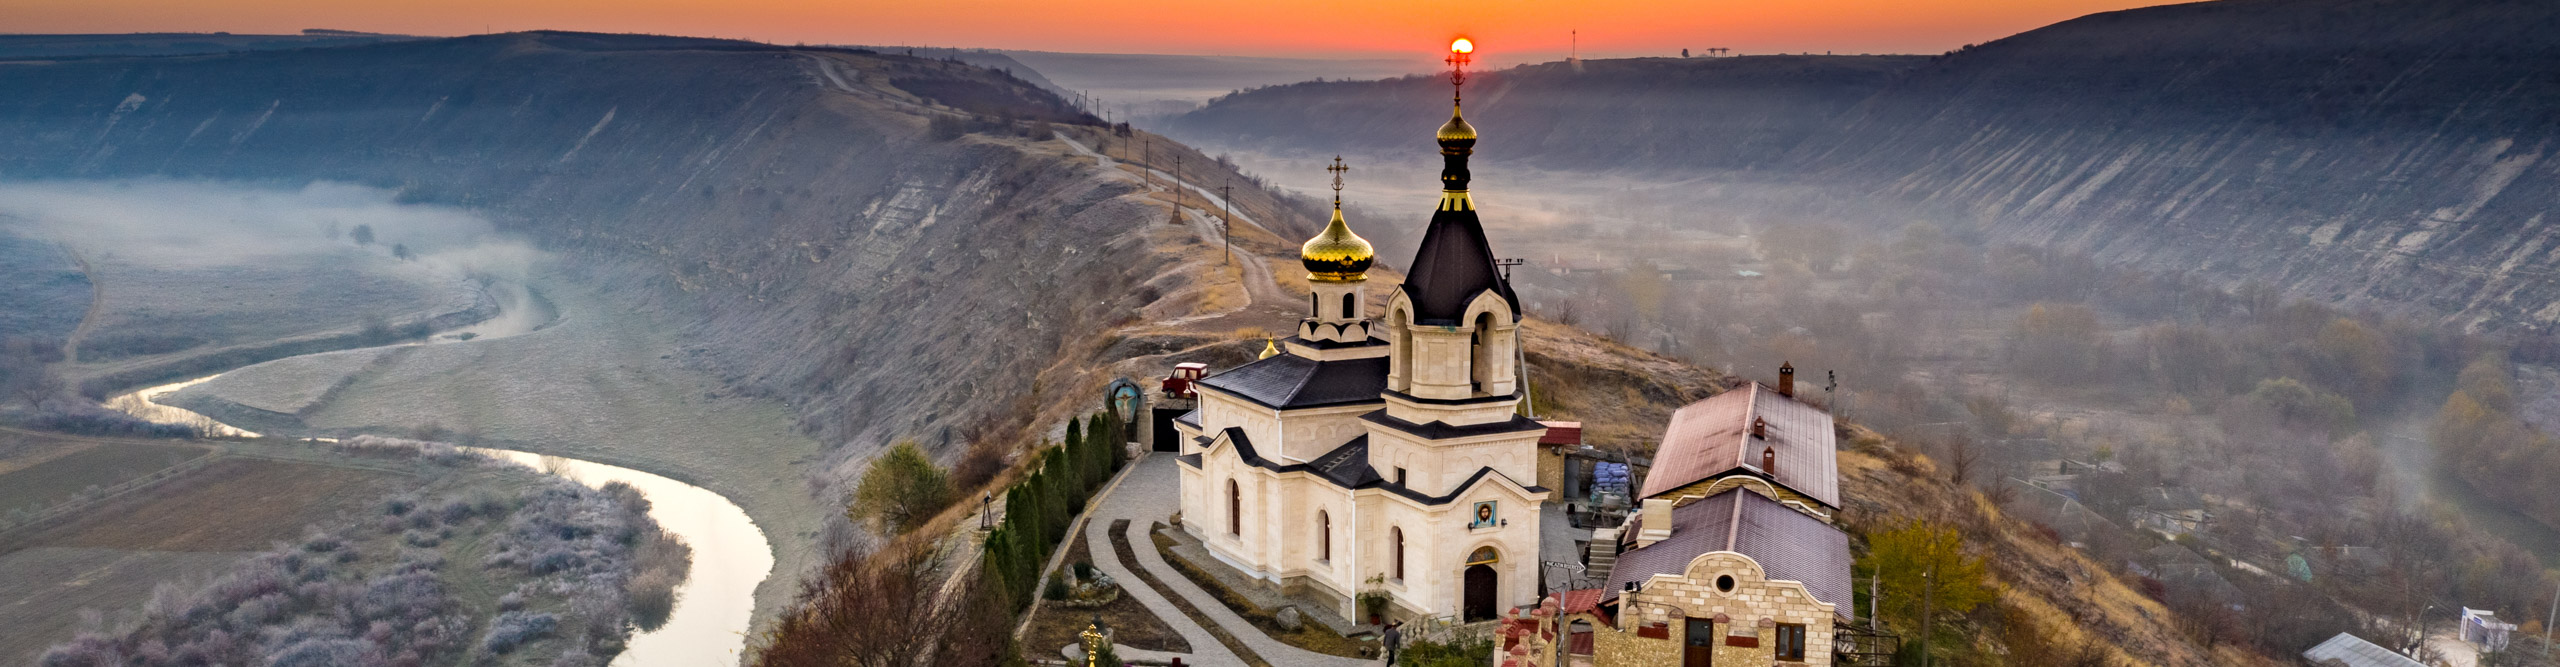 Old Orhei Monastery high on the hill at sunrise in Moldova Republic, in winter 